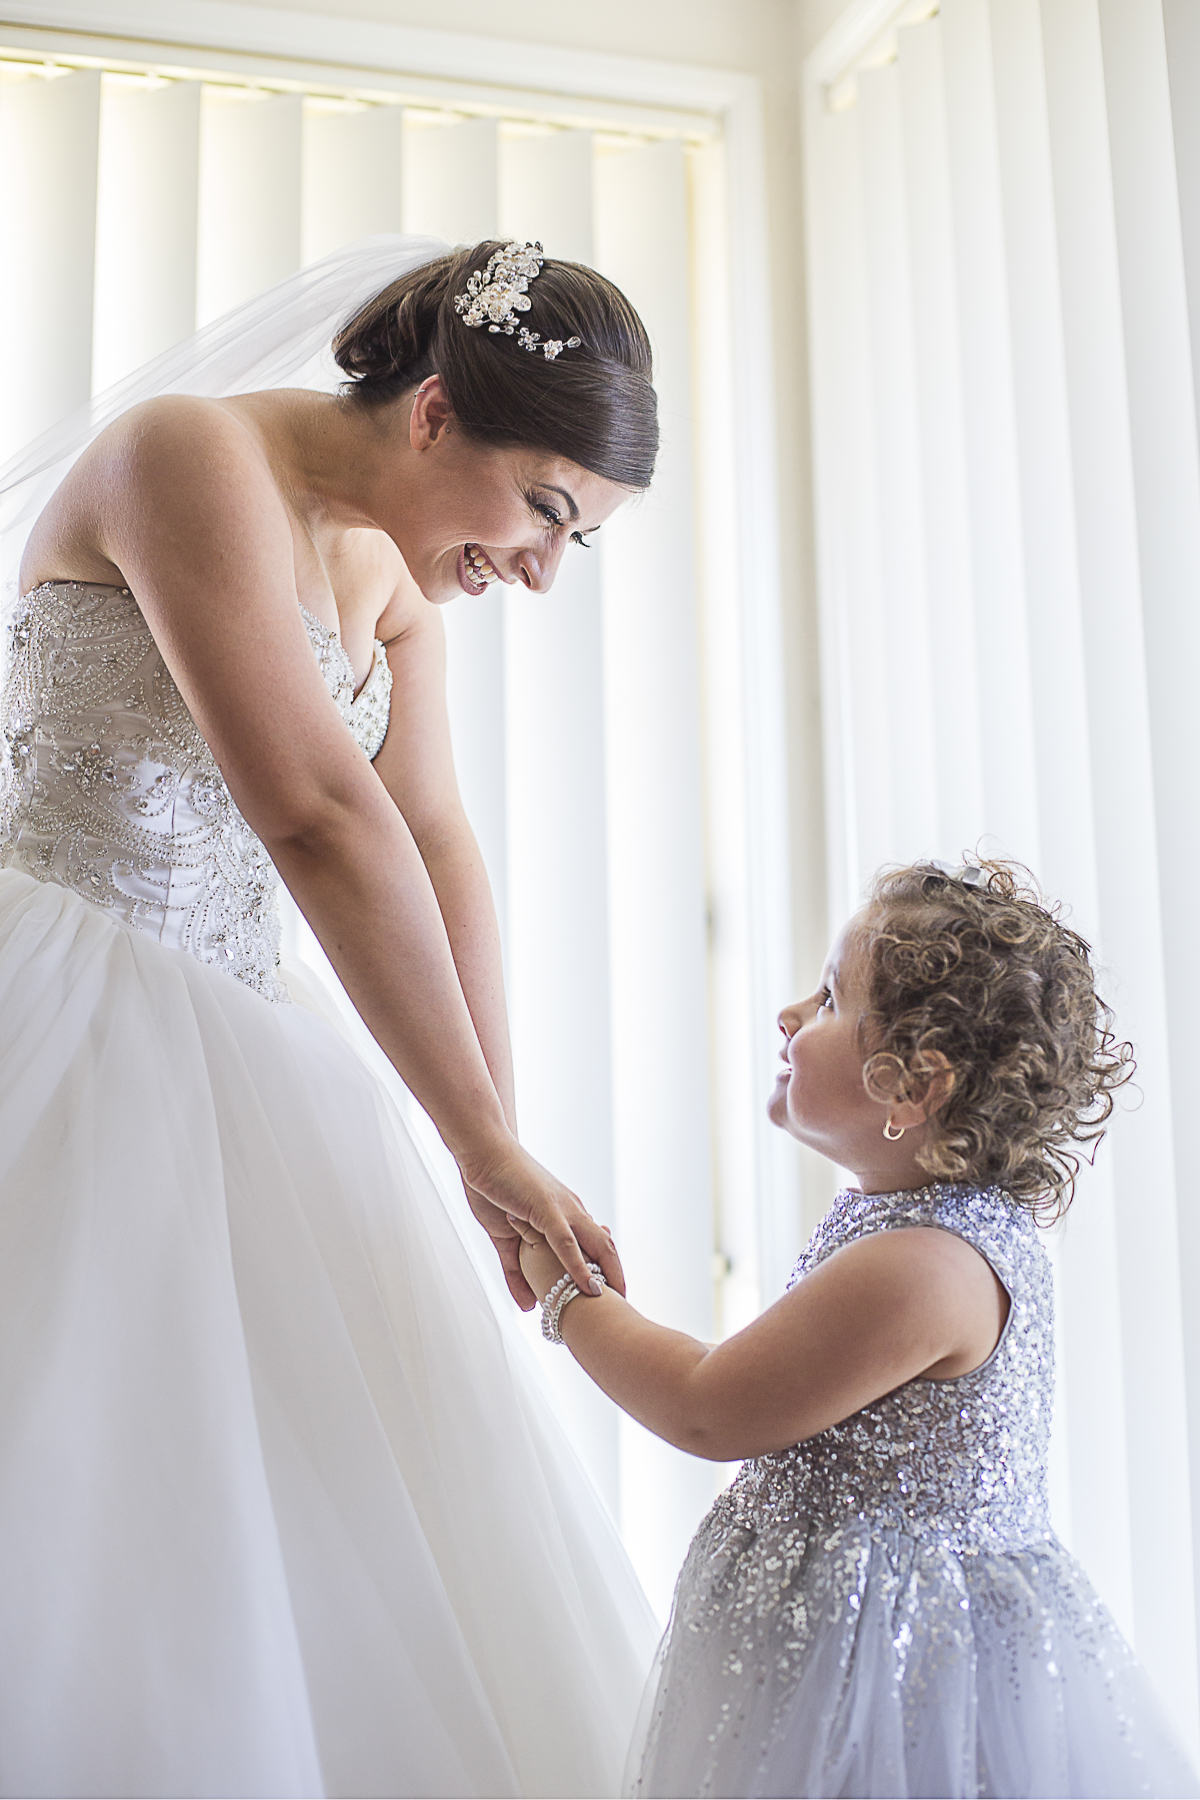 Bride and niece wedding photo | Fantasie Photography